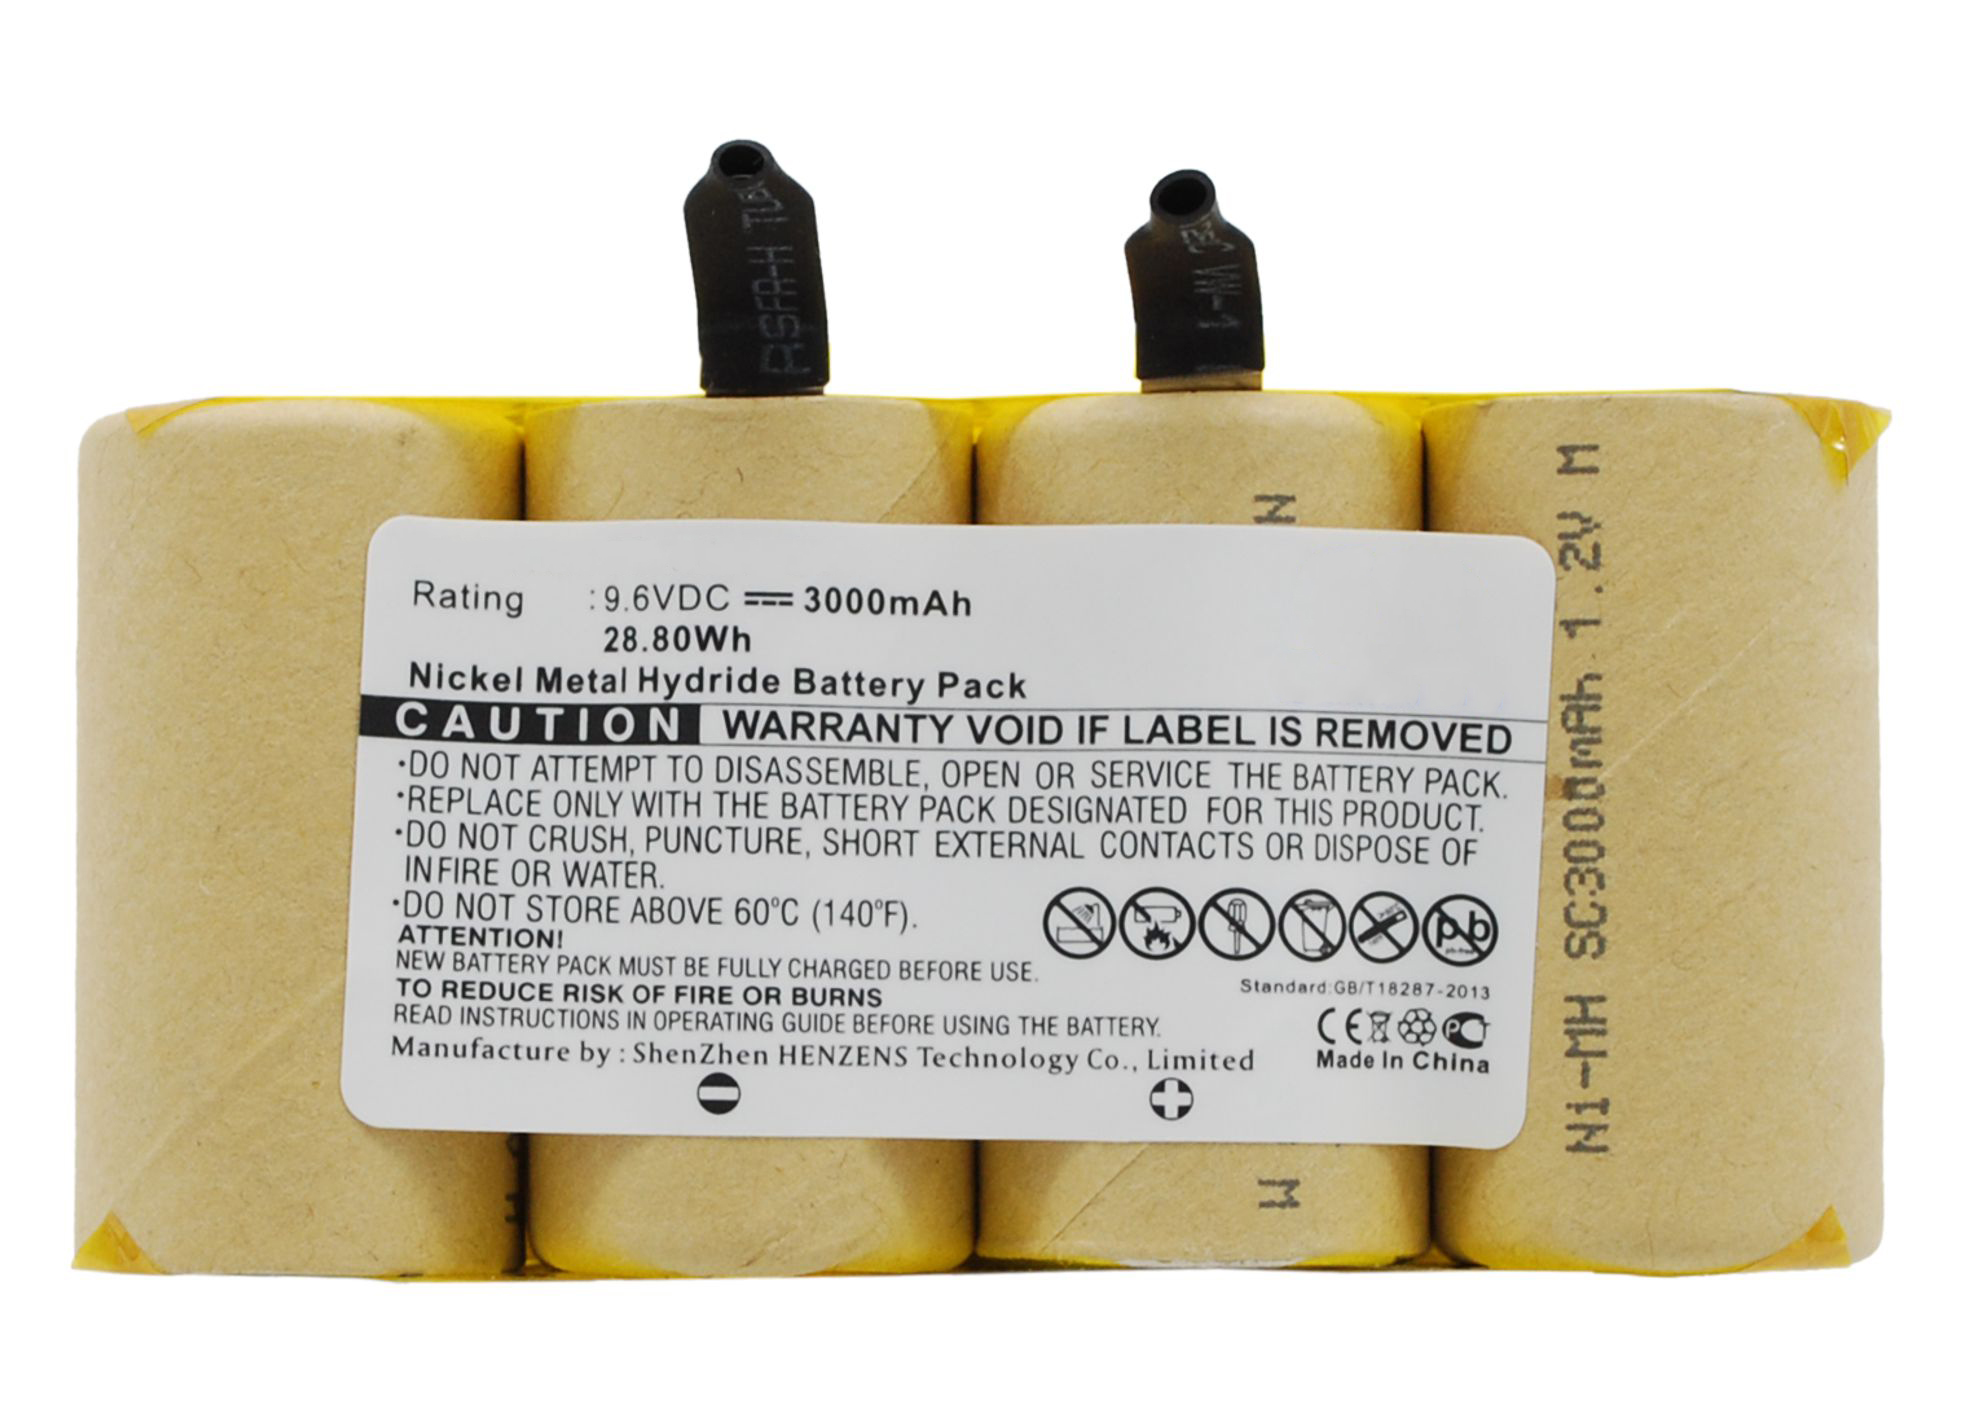 Batteries for Black & DeckerVacuum Cleaner